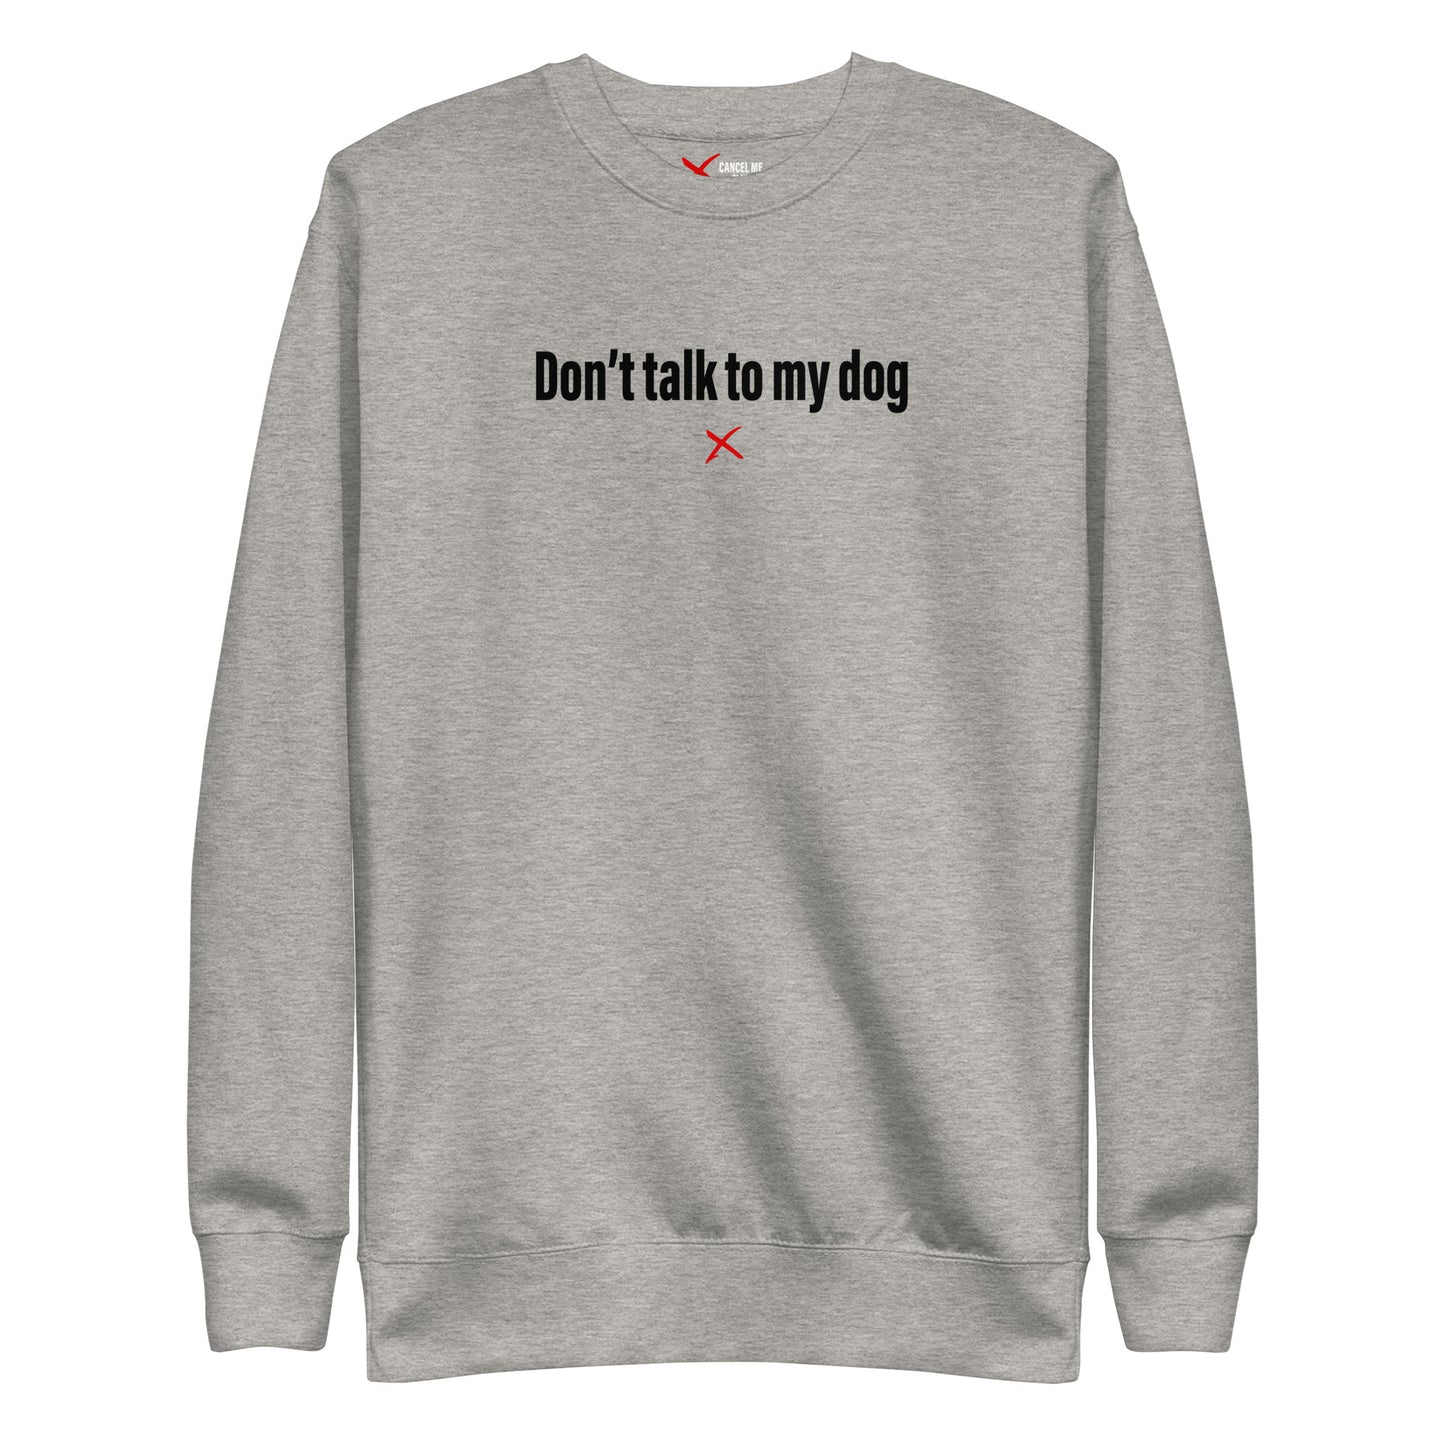 Don't talk to my dog - Sweatshirt